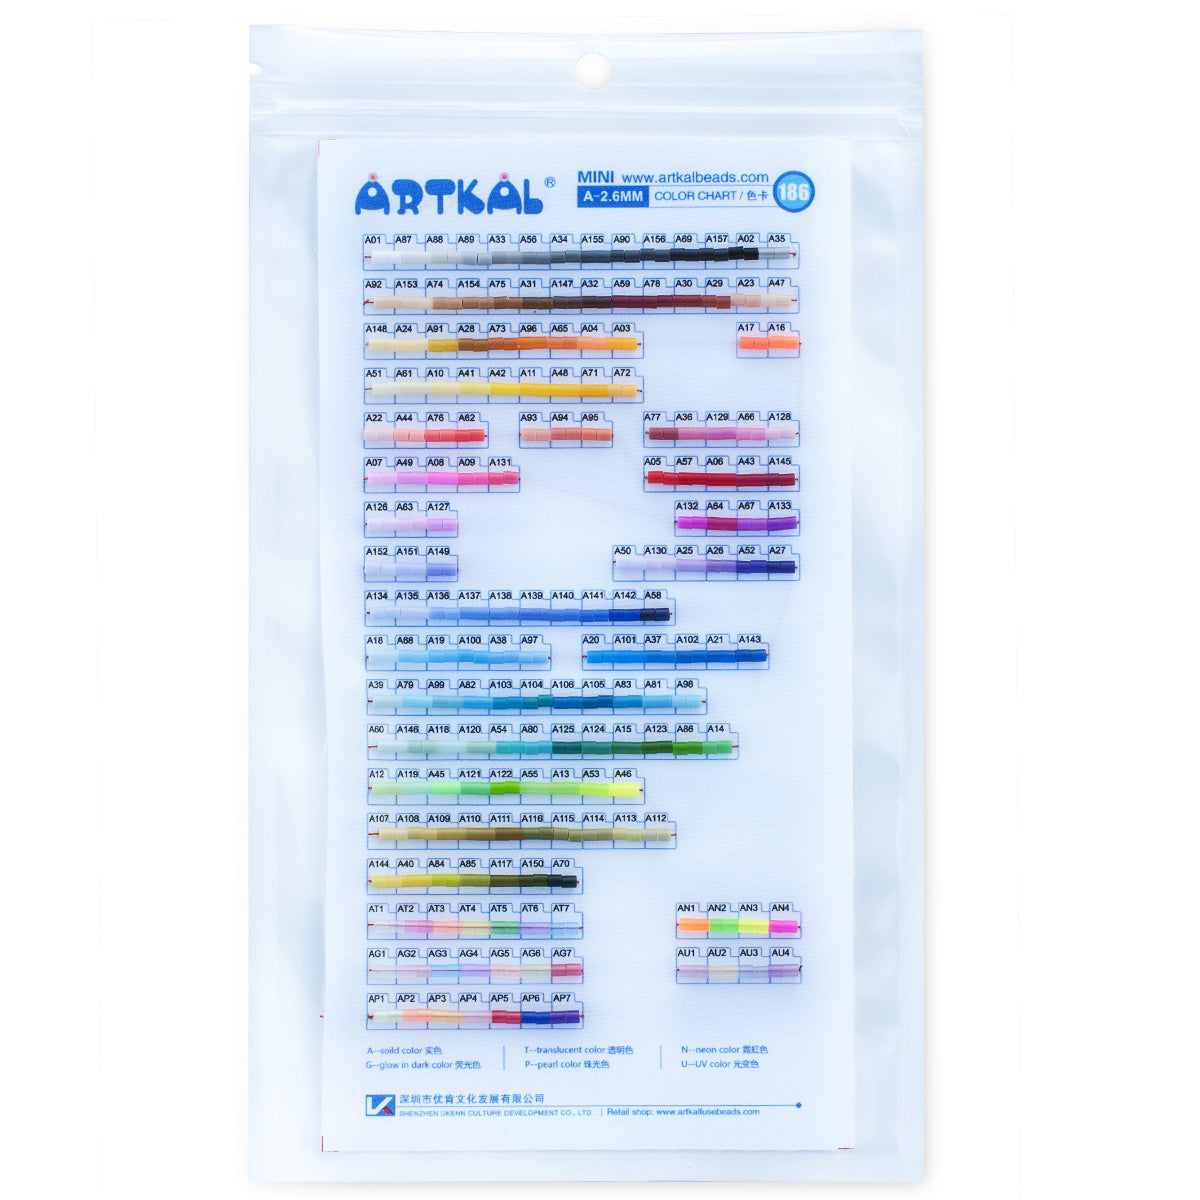 NEW-Artkal Beads 물리적 색상 차트